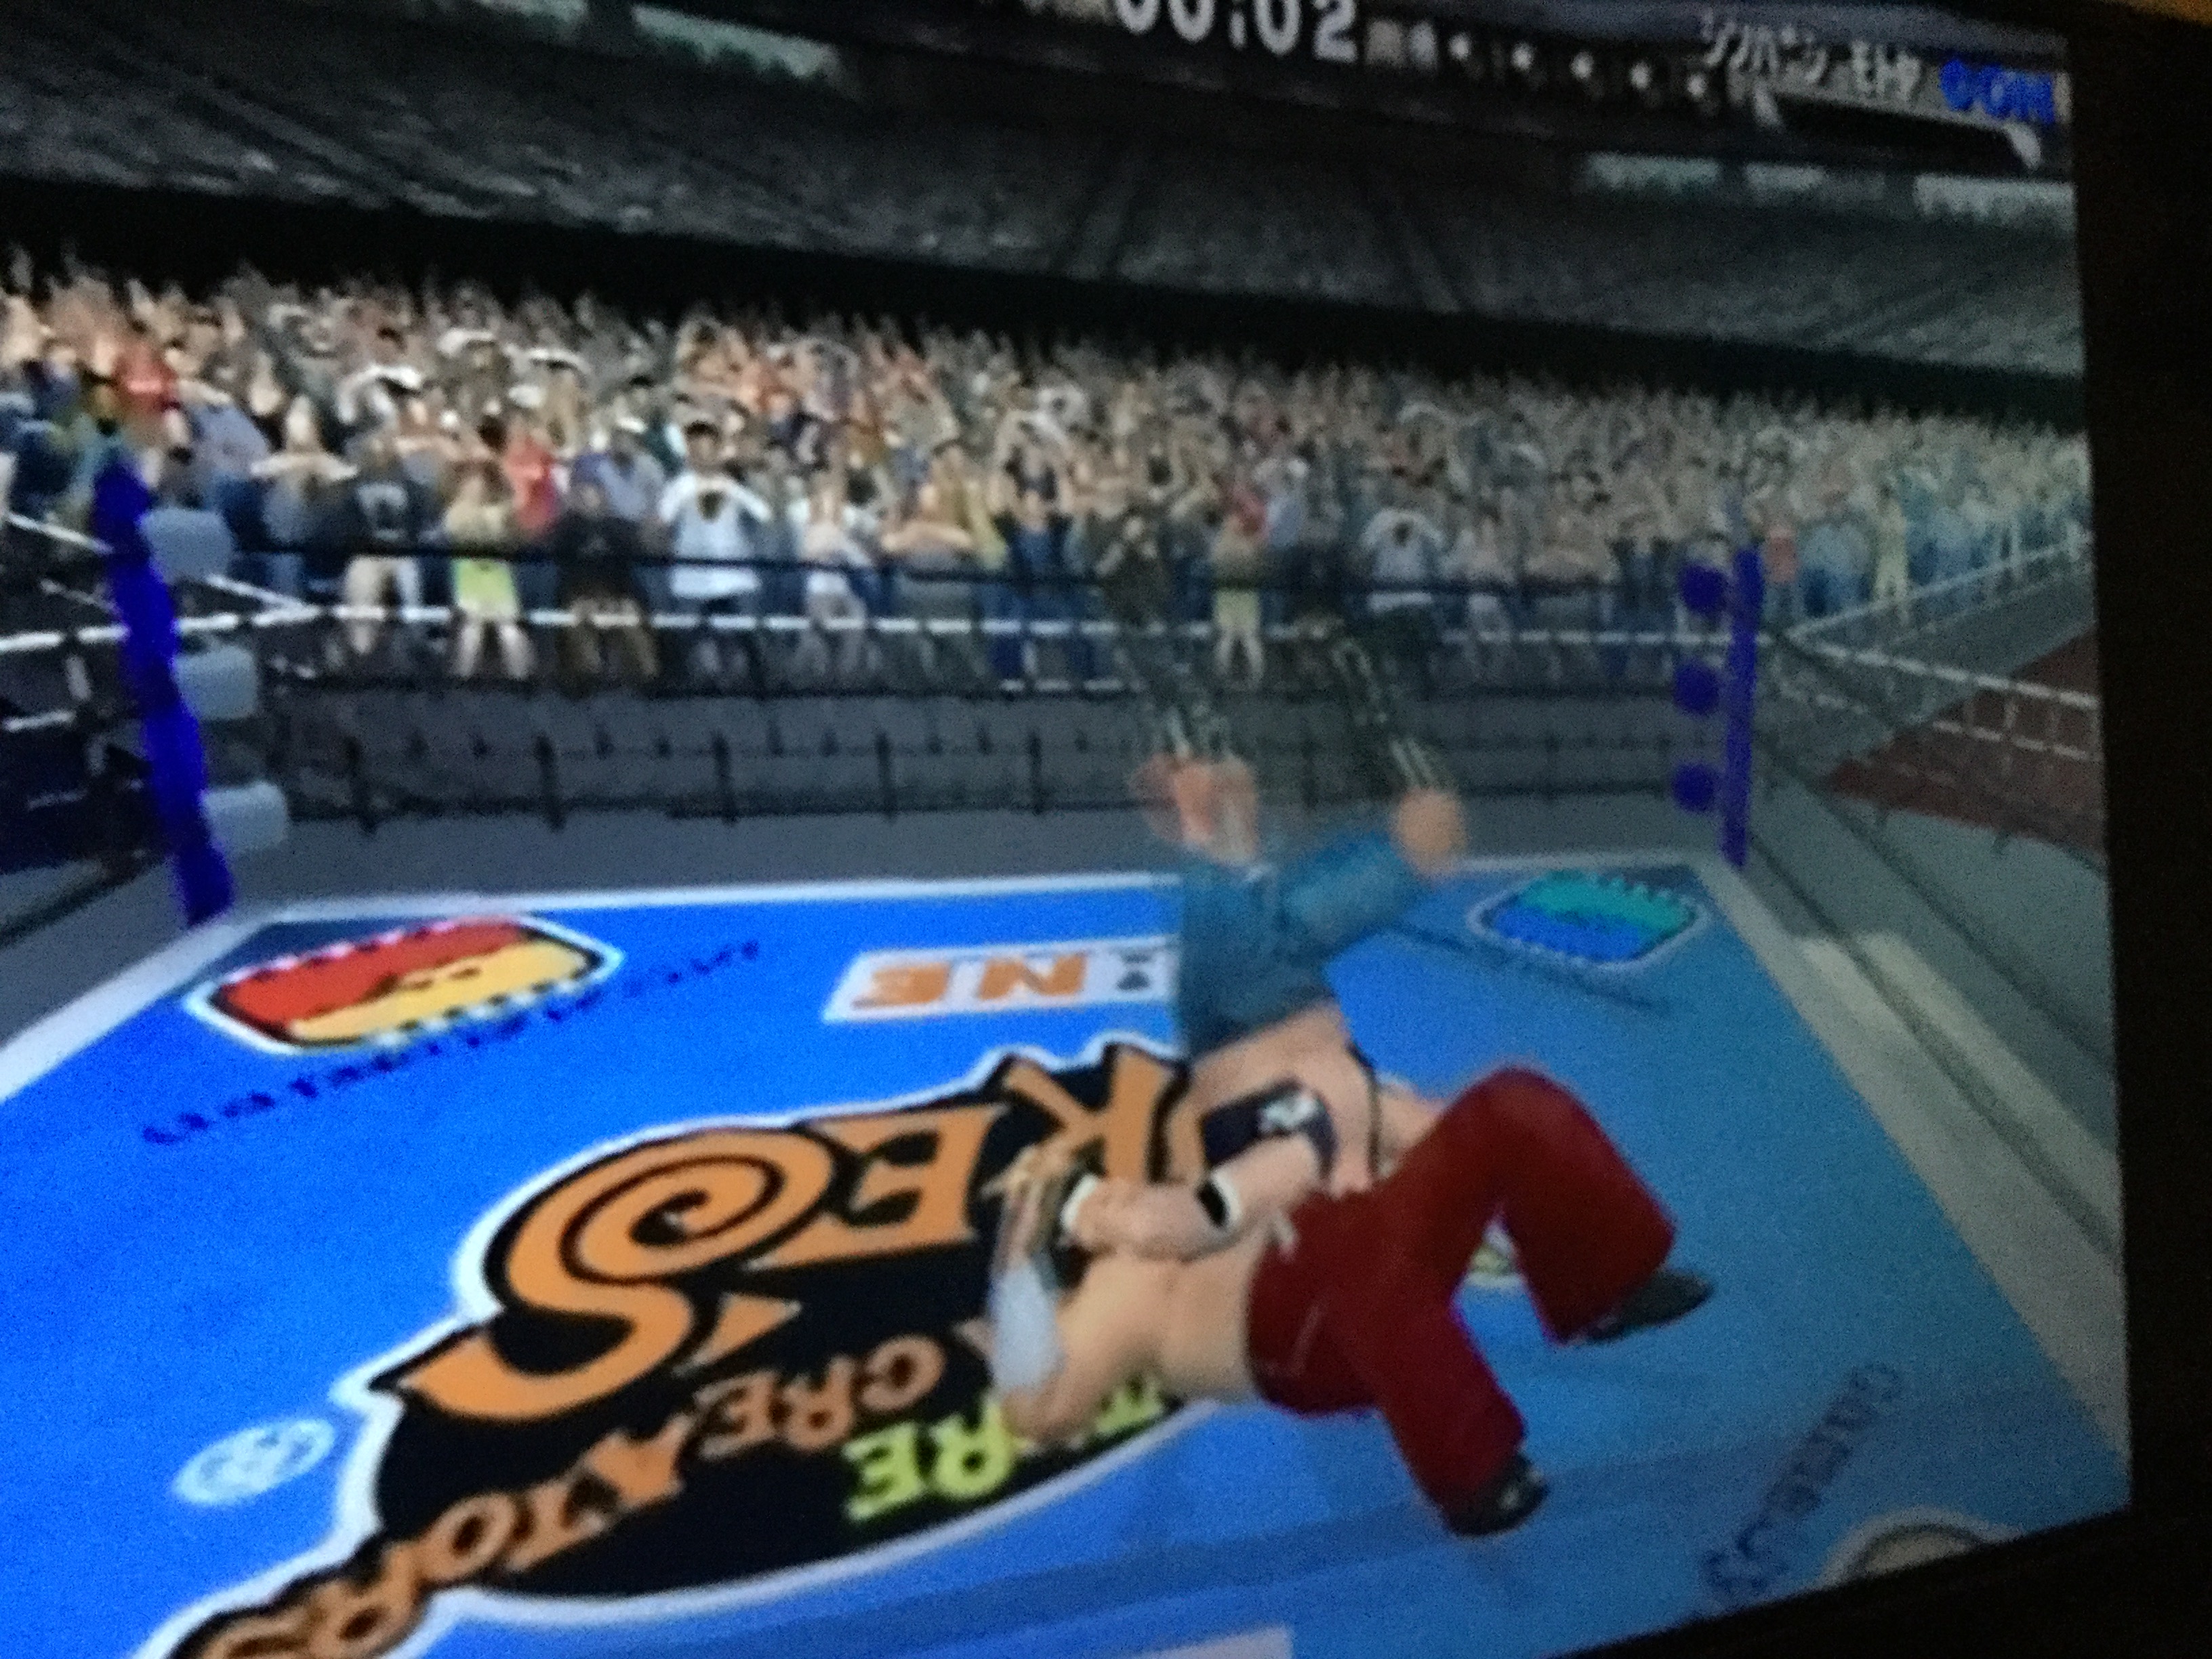 Online Pro Wrestling from Yukes - PS2